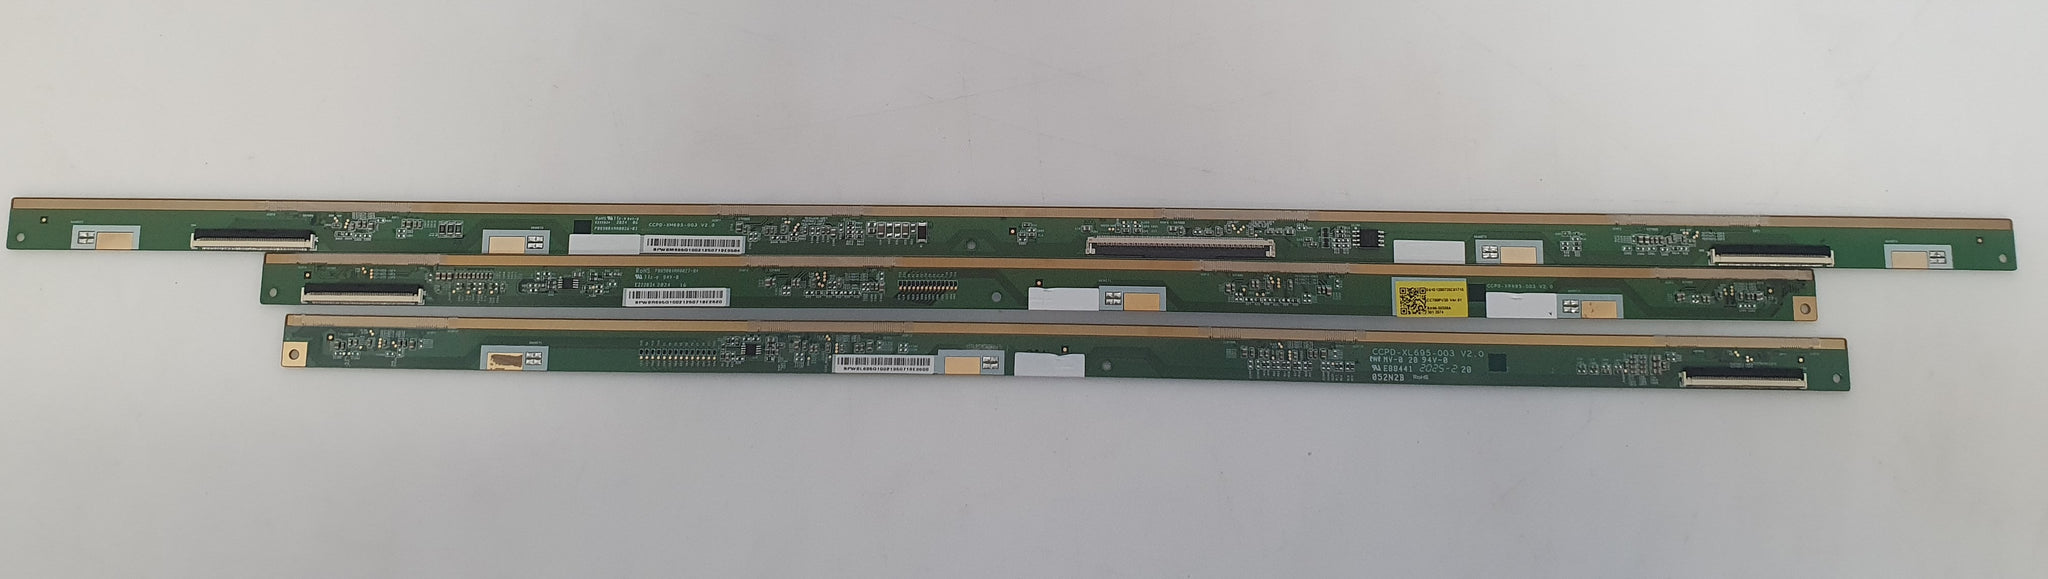 CCPD-XL695-003 V2.0 CCPD-XM695-003 V2.0 CCPD-XR695-003 V2.0 matrix boards Samsung UE70TU7020W